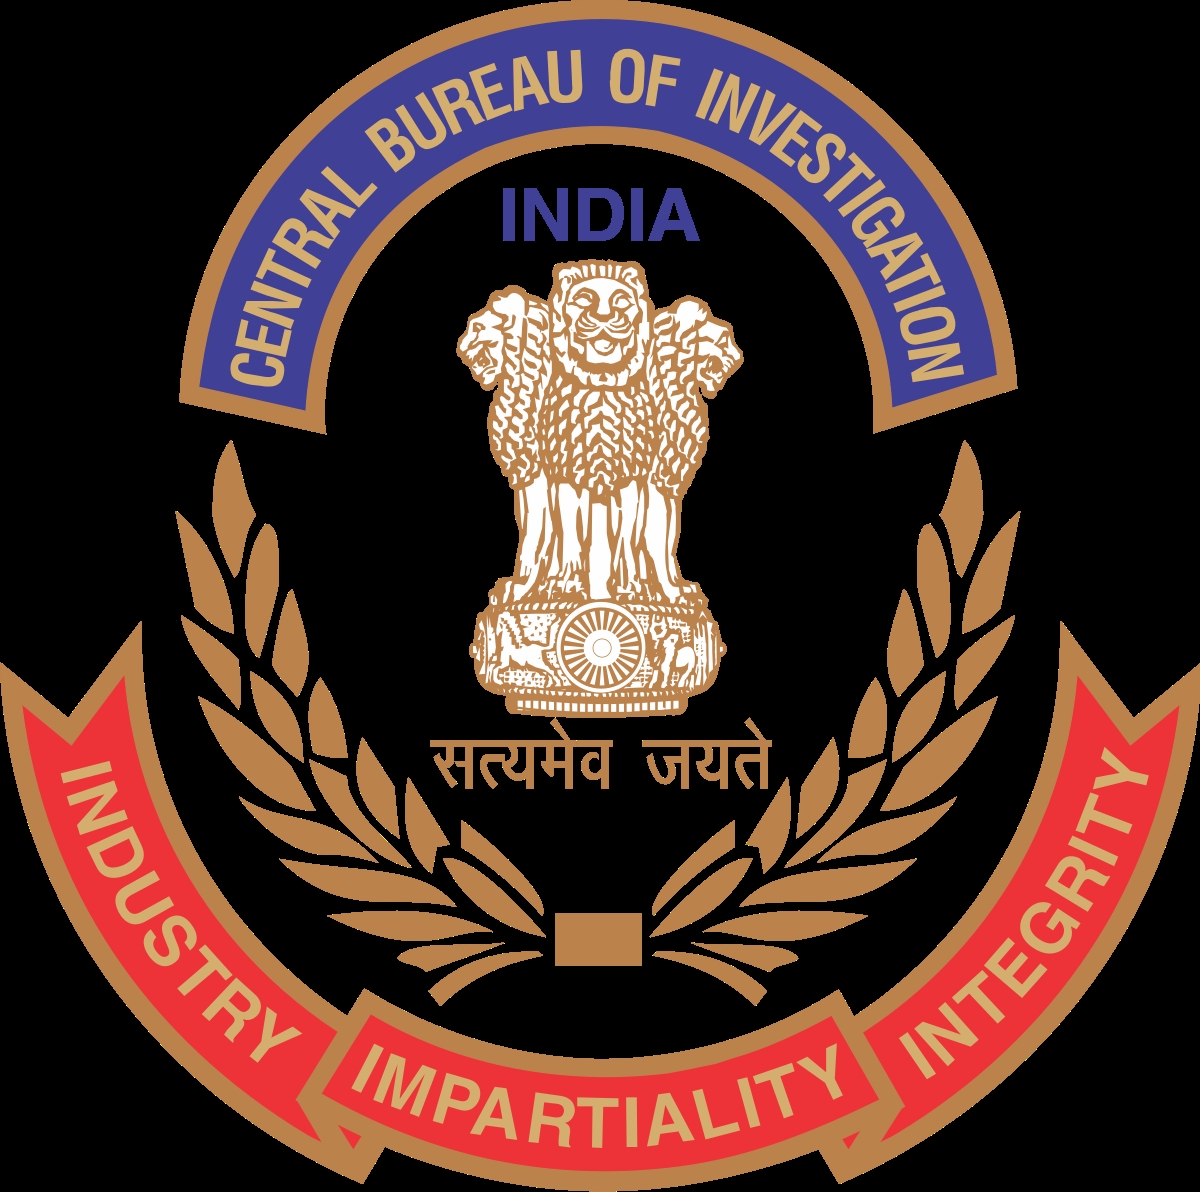 2654 Cr Bank fraud scam: CBI filed chargesheet against Bhatnagars